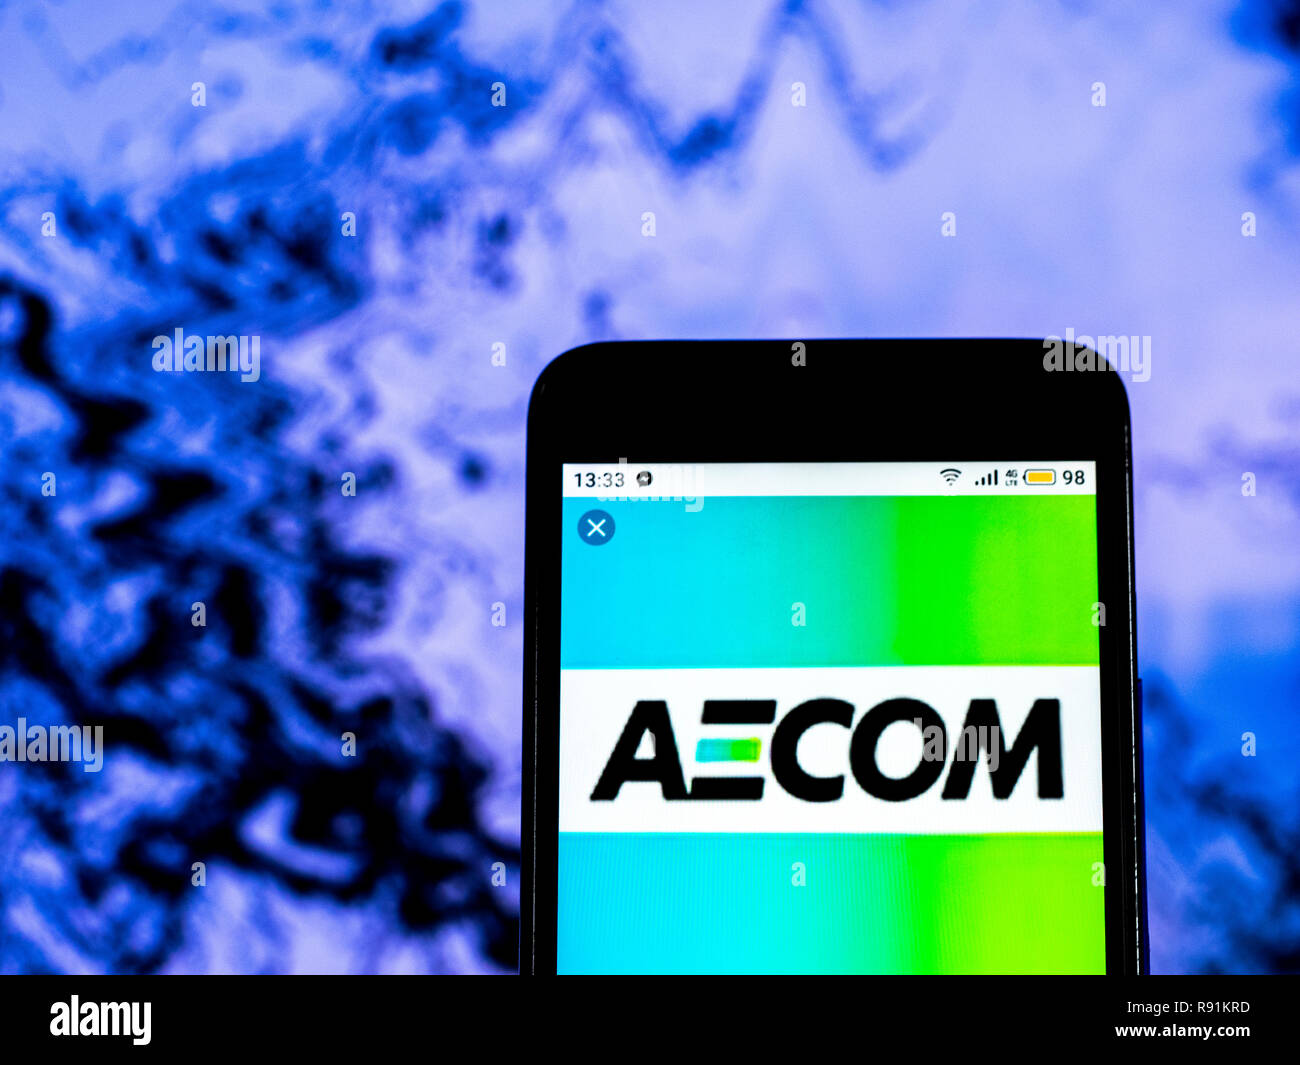 AECOM Engineering company logo seen displayed on smart phone Stock Photo